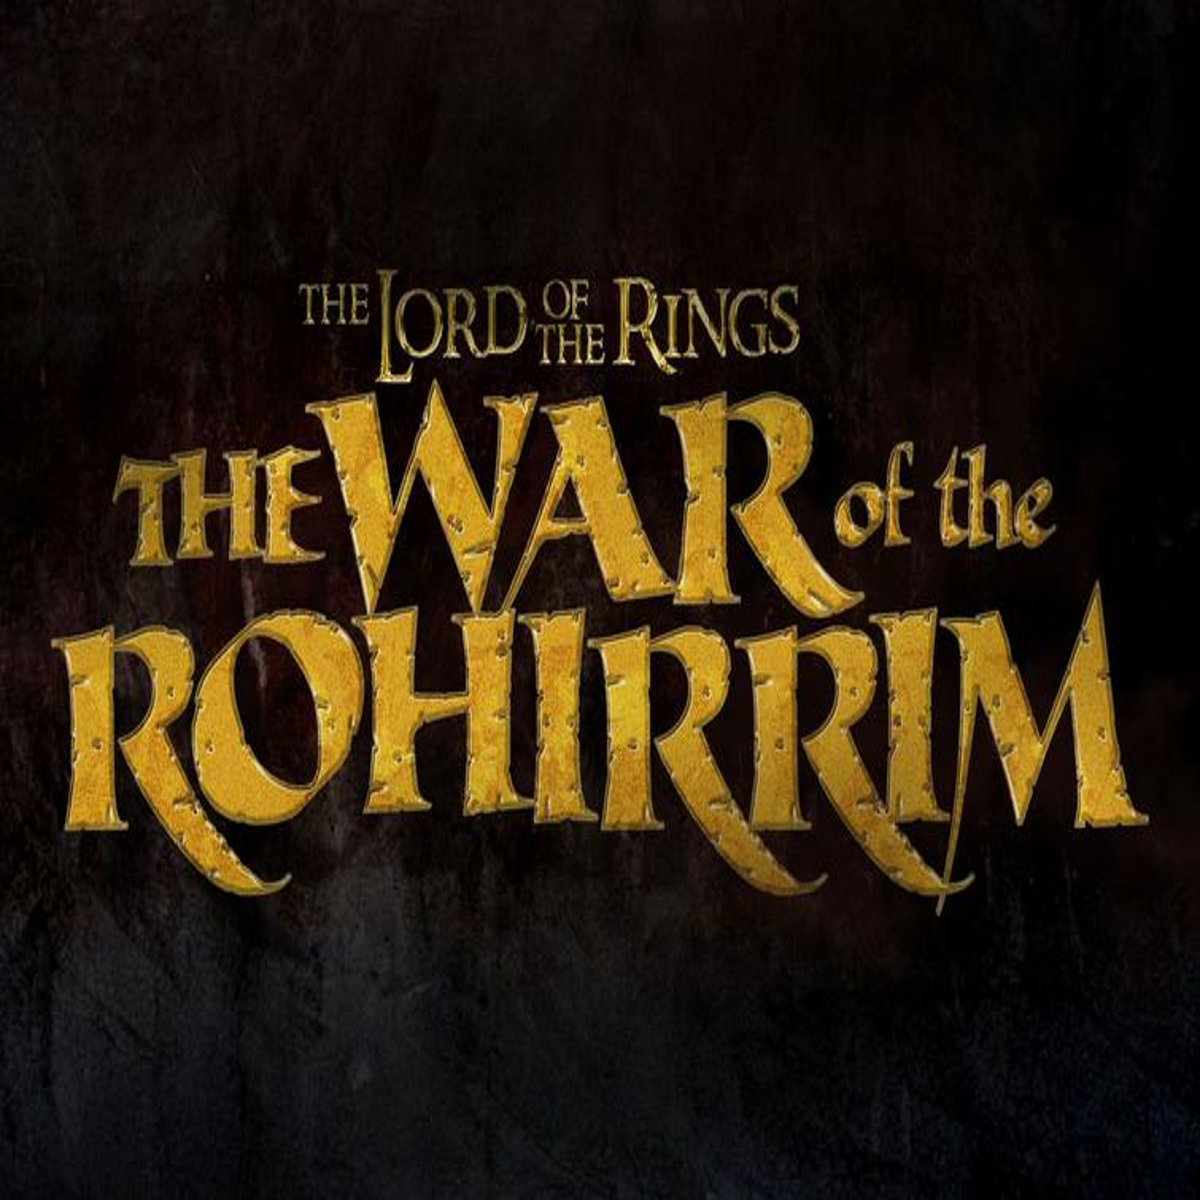 LOTR: The Rings of Power Season 2: Cast, Plot, Release Date